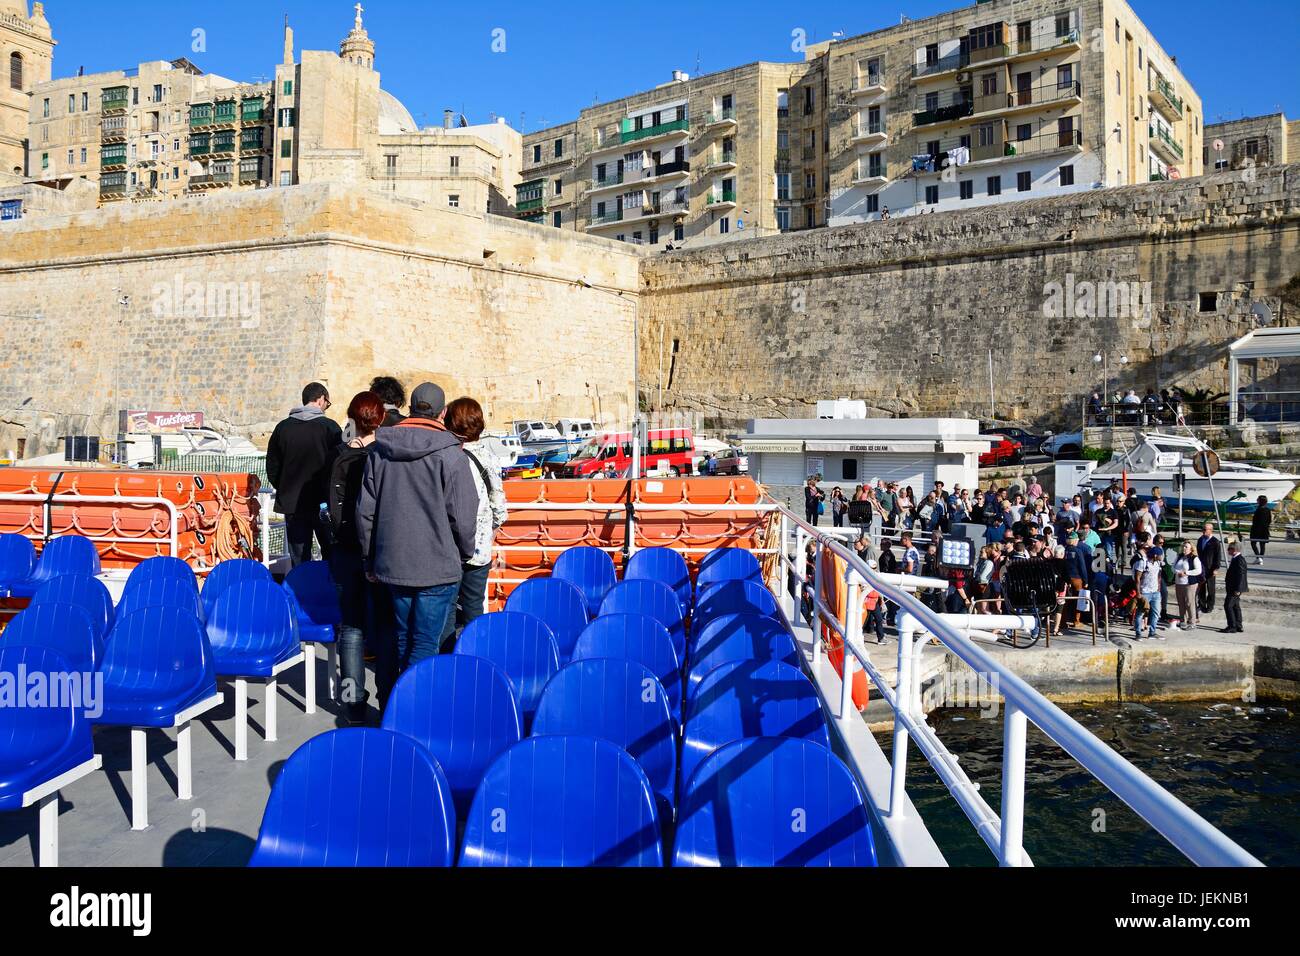 Passengers disembarking a ferry just returned from Sliema, Valletta, Malta, Europe. Stock Photo